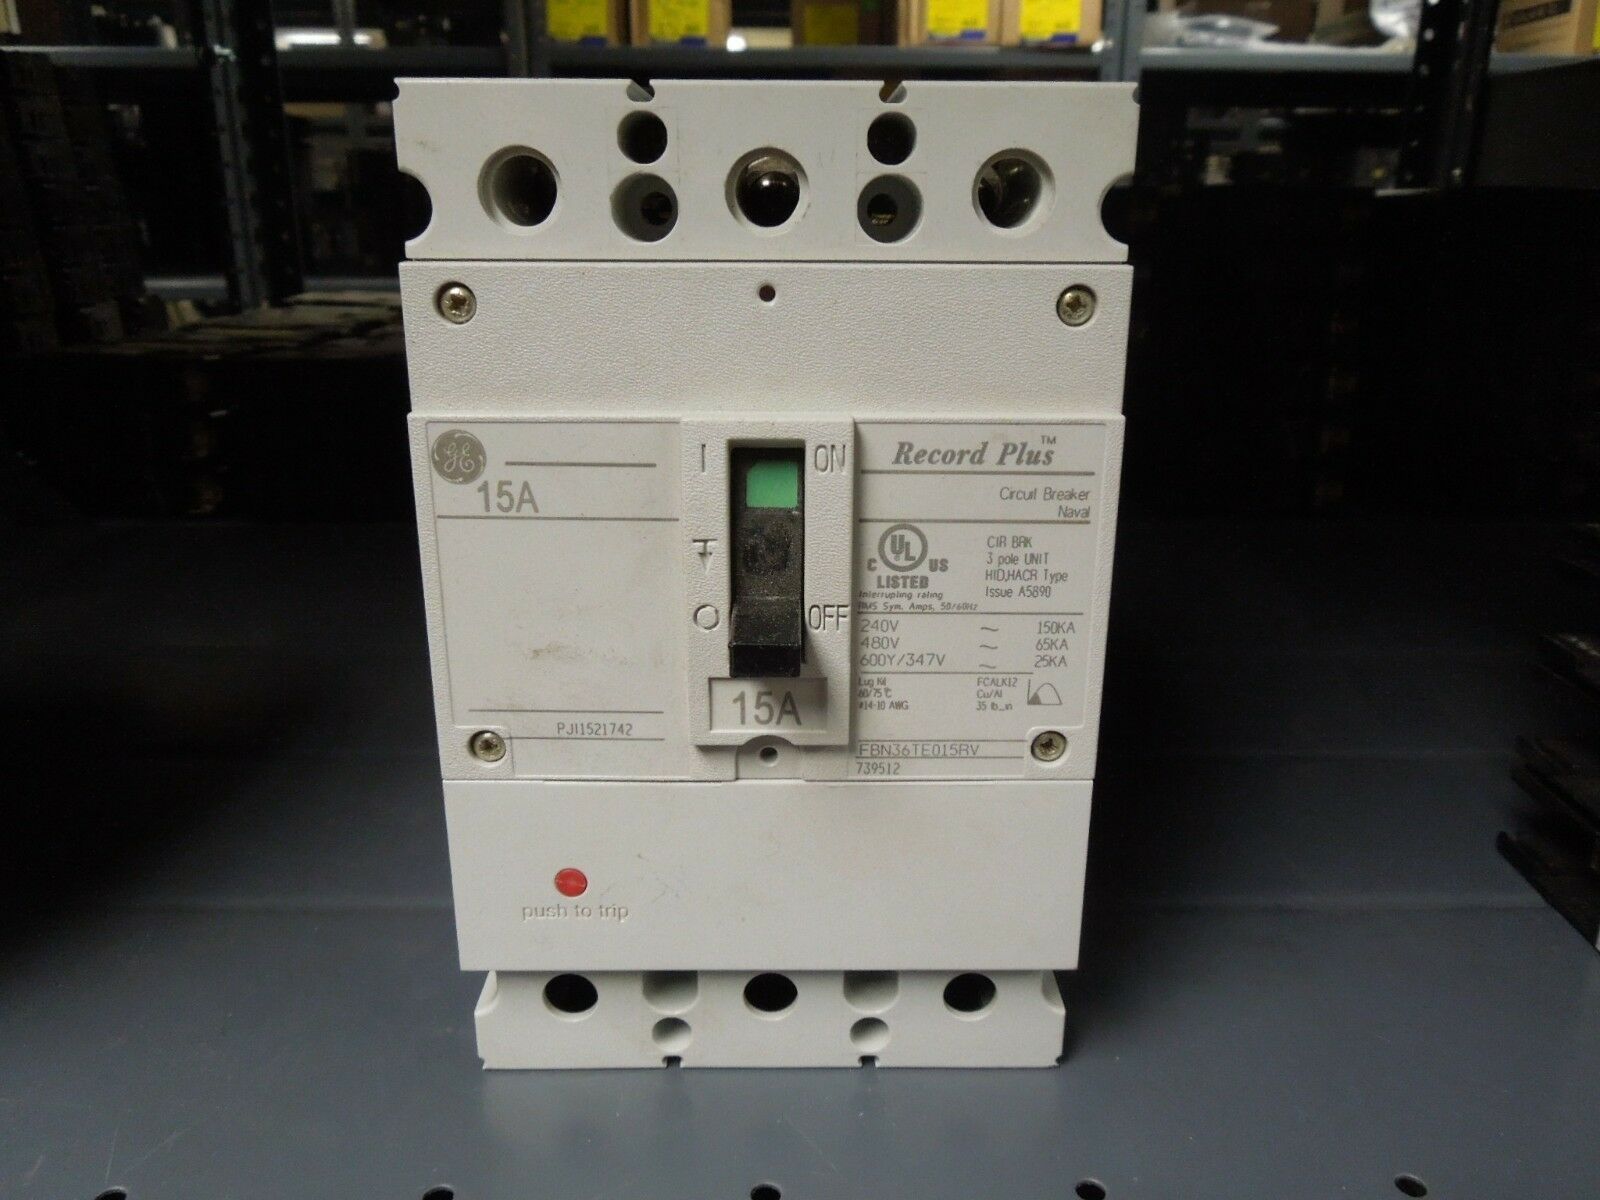 GE Record Plus FBN36TE015RV 15A 3P 600V Circuit Breaker w/ panel Connectors Used - $250.00